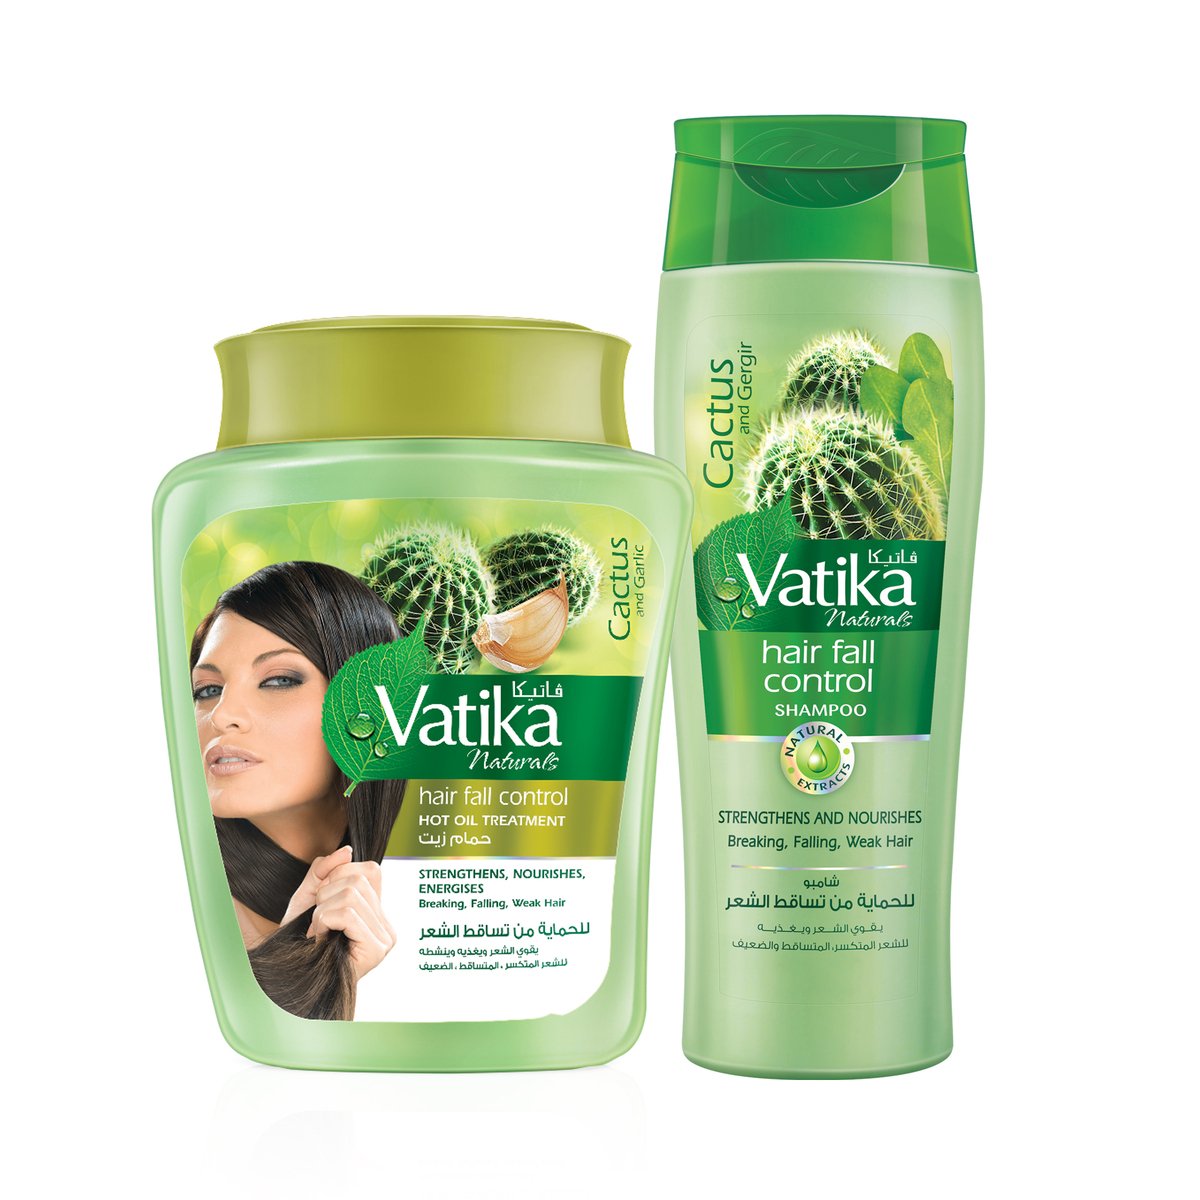 Vatika Naturals Hammam Zait Hair Fall Control 1 kg + Shampoo 200 ml